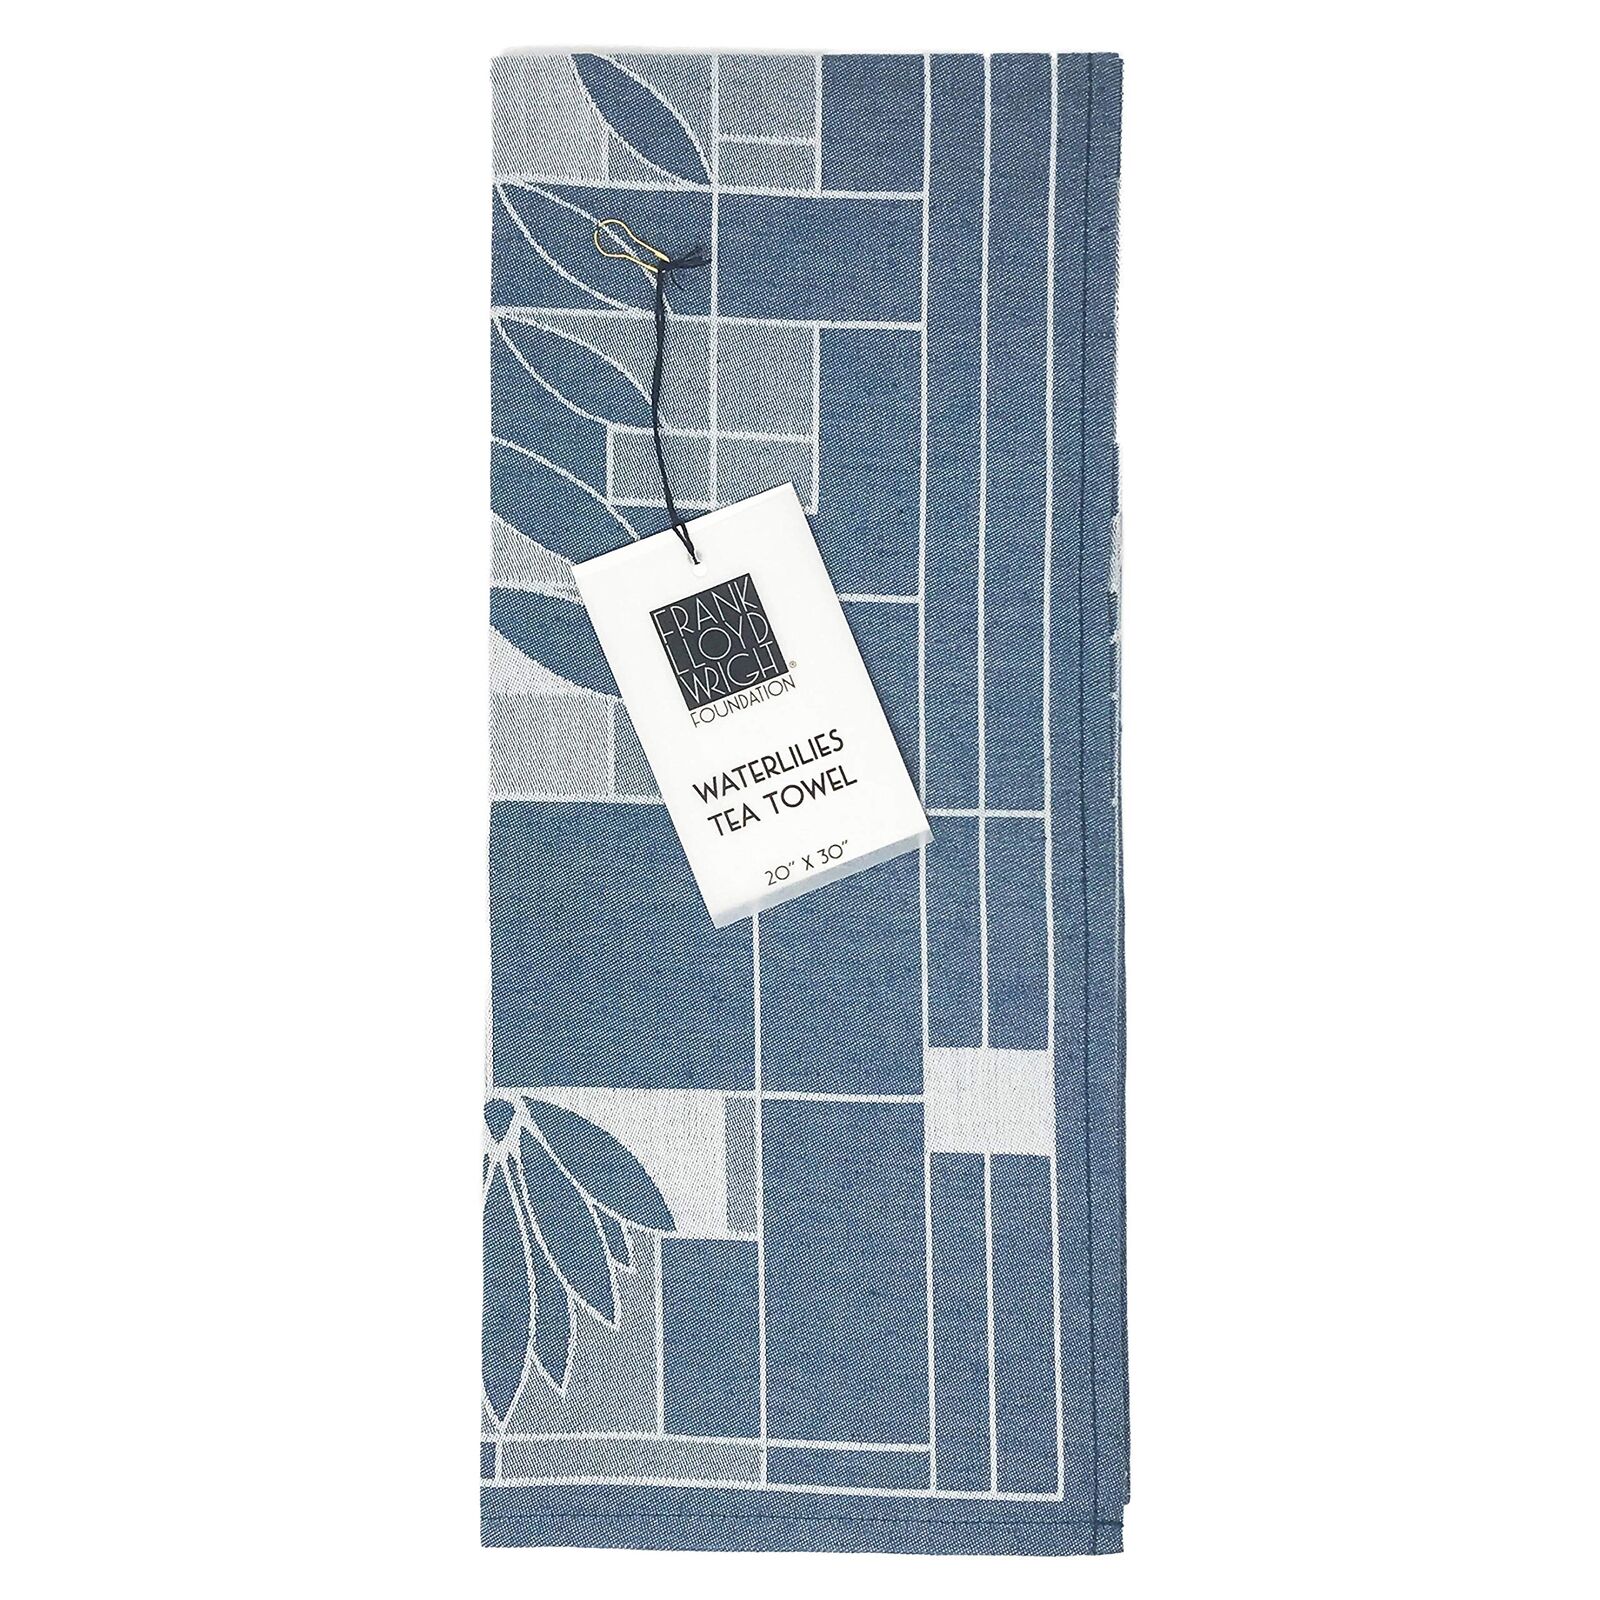 KAF Home Frank Lloyd Wright Woven Jacquard Tea Towel 20 x 30-inch 100-Percent Co